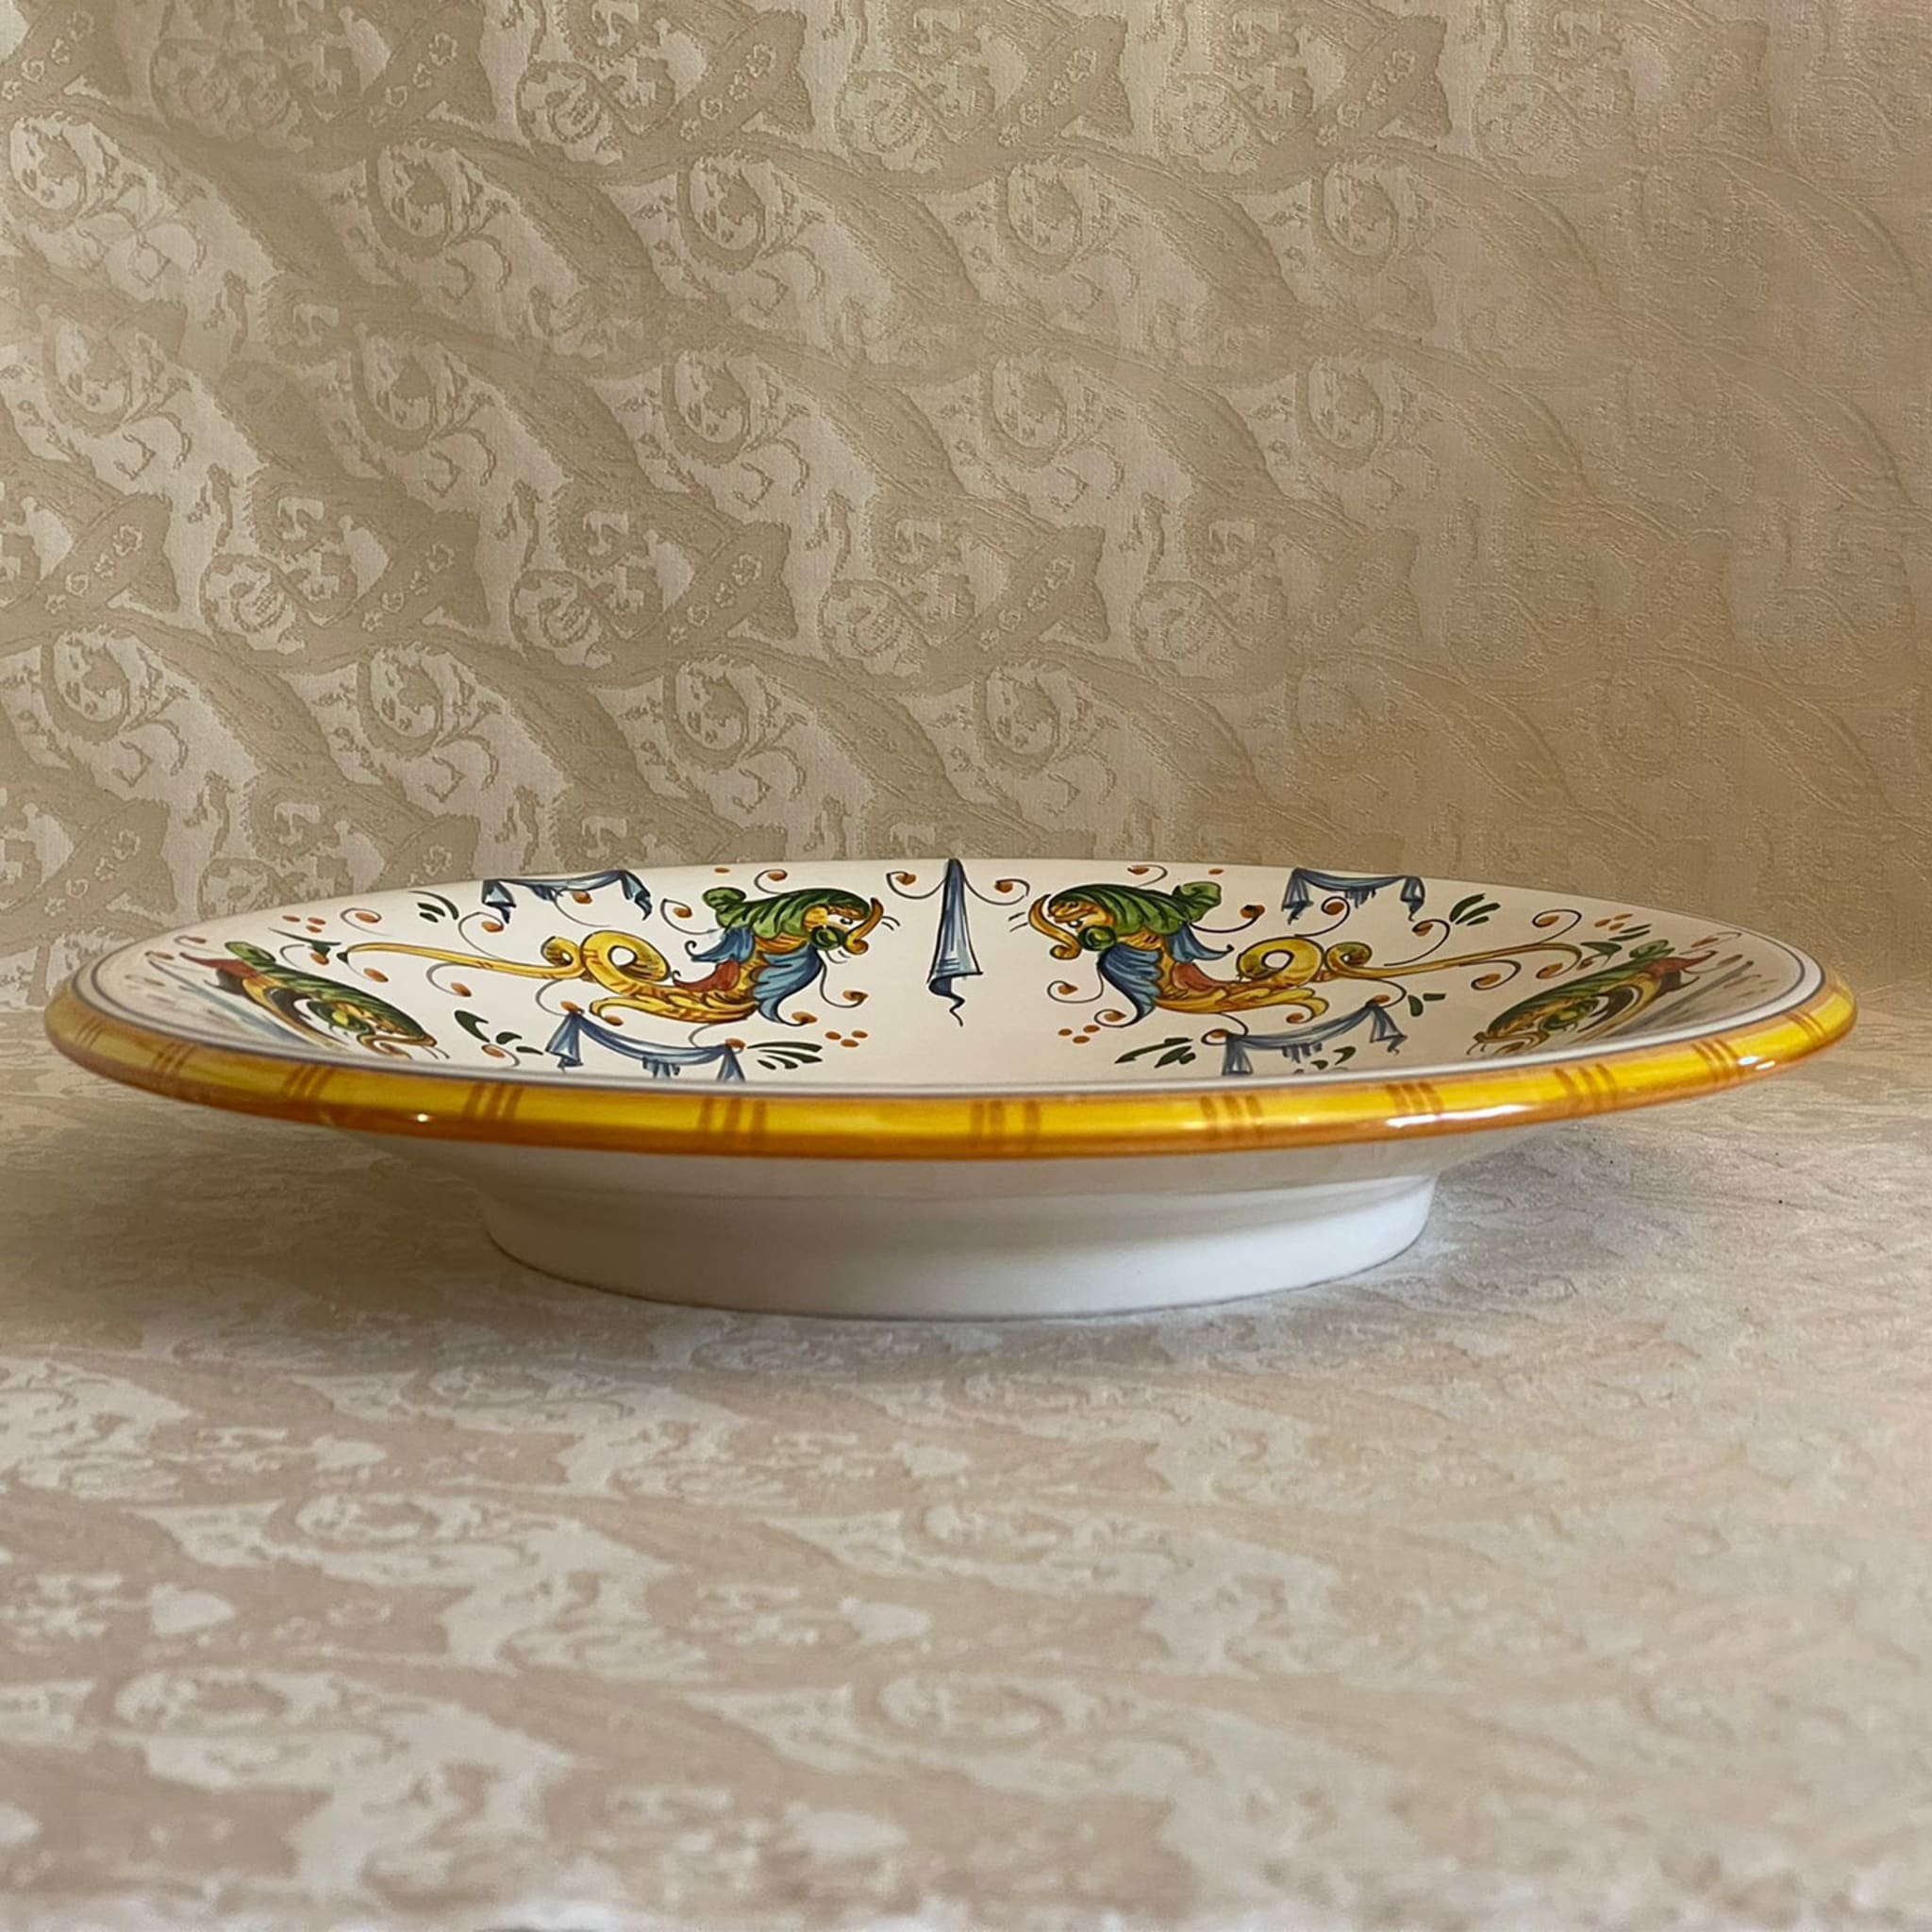 Raphaelesque-style Ceramic Plate - Alternative view 1